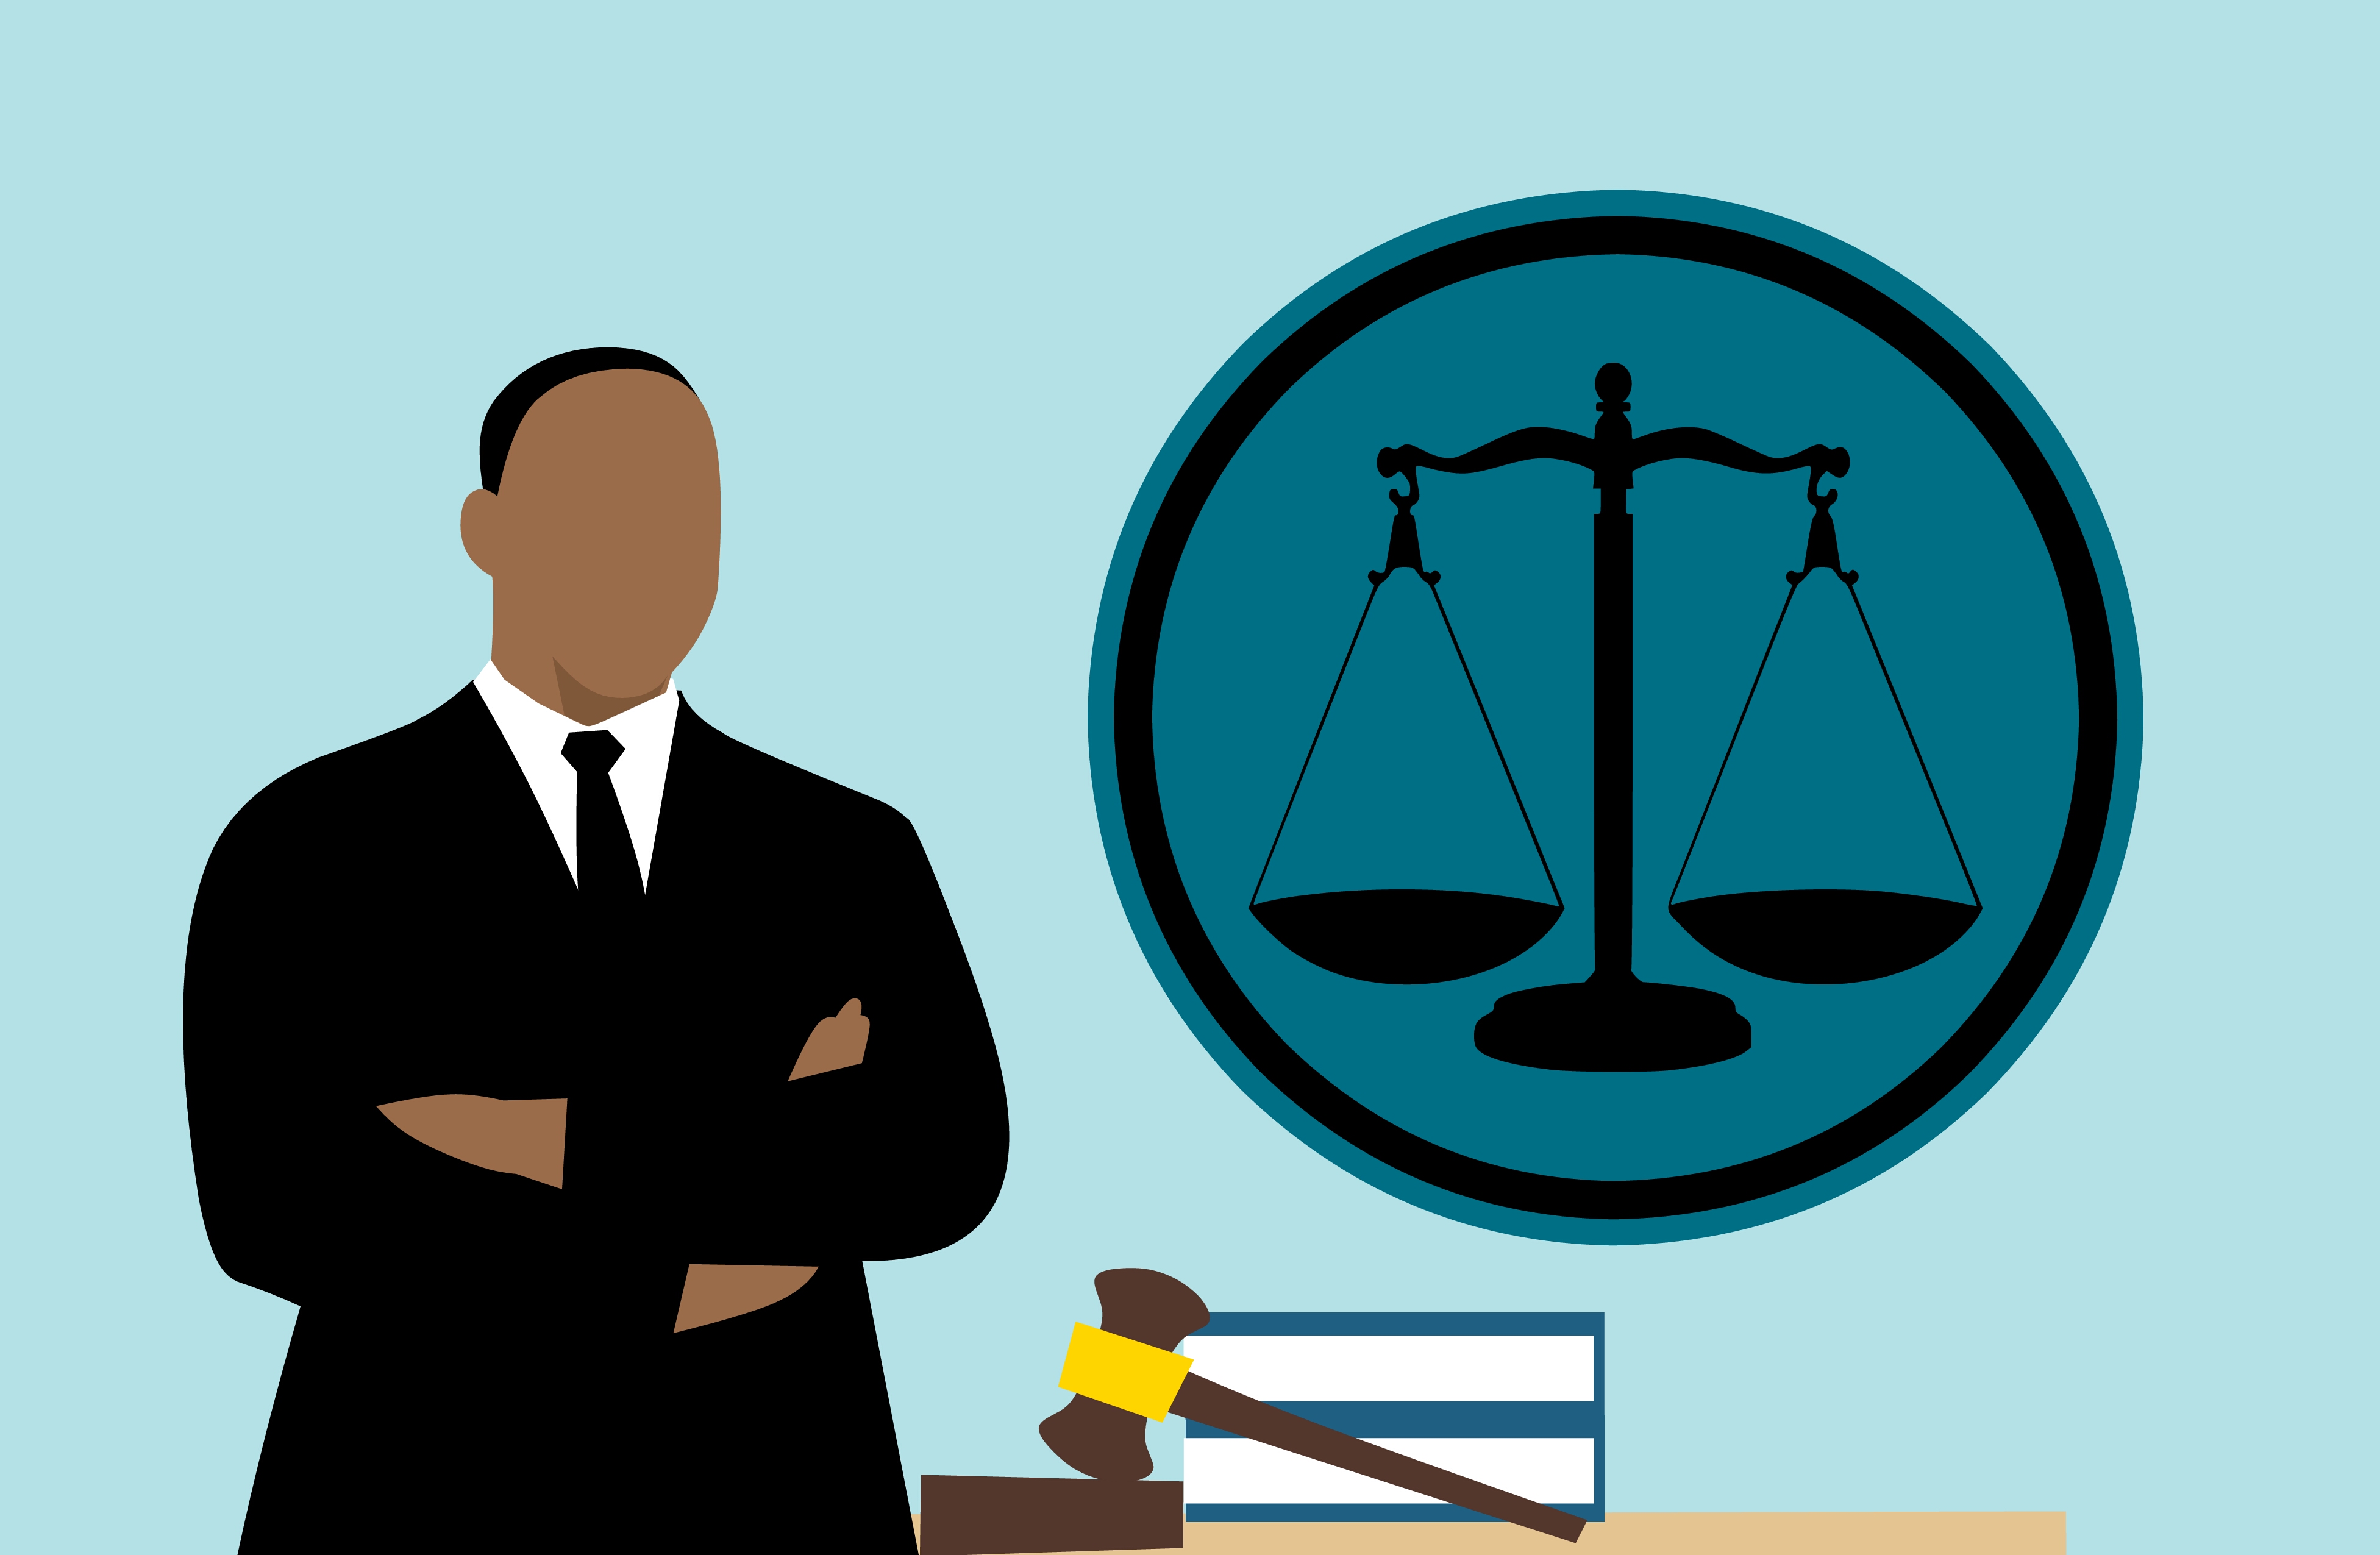 lawyer-judge-african-cartoon-man-american-1457525-pxhere.com.jpg